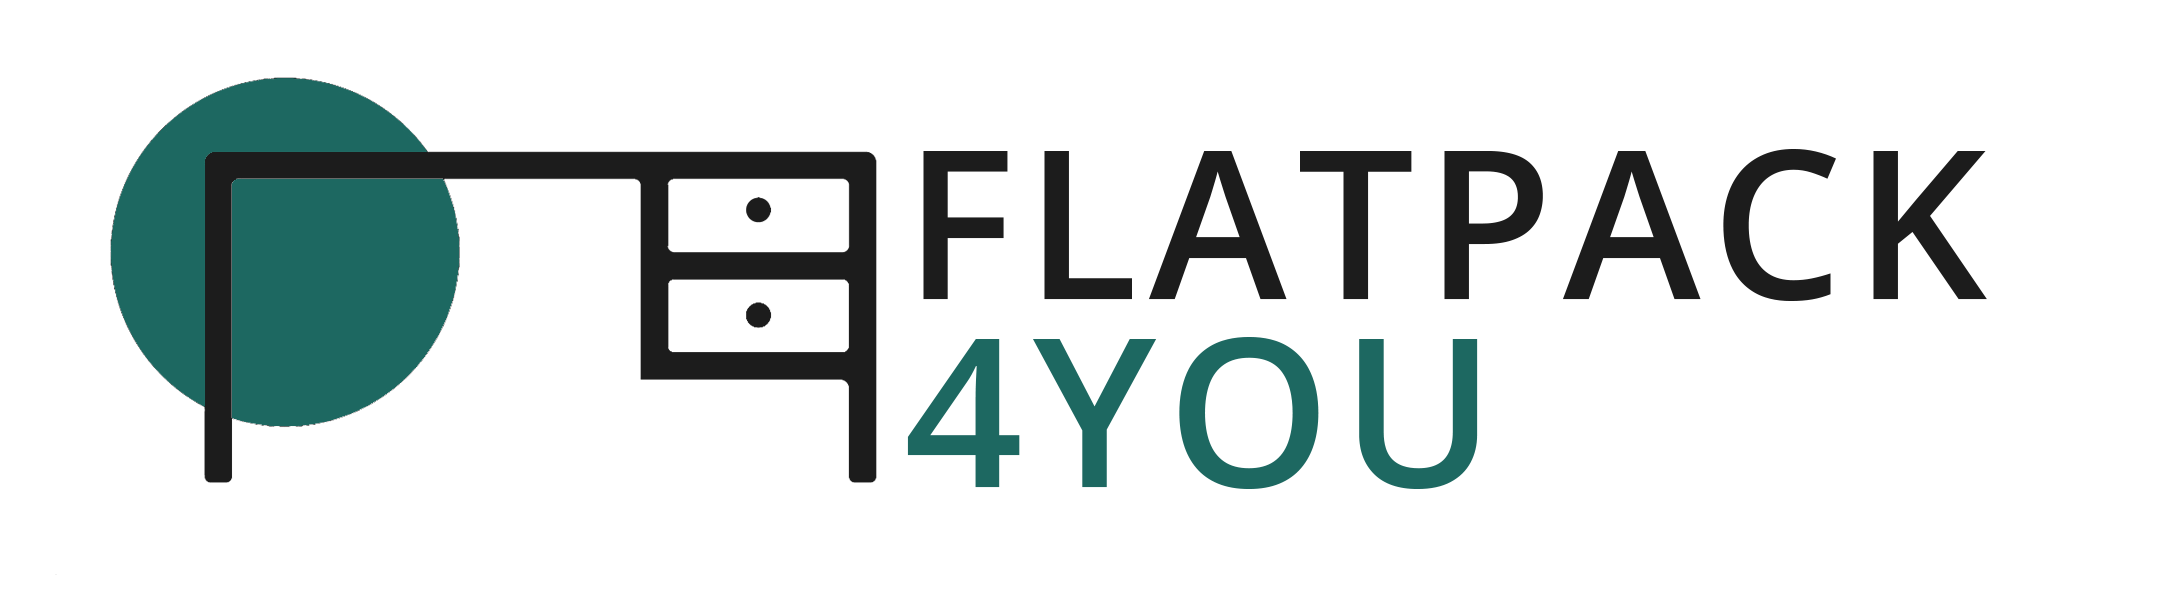 Flatpack4you Logo